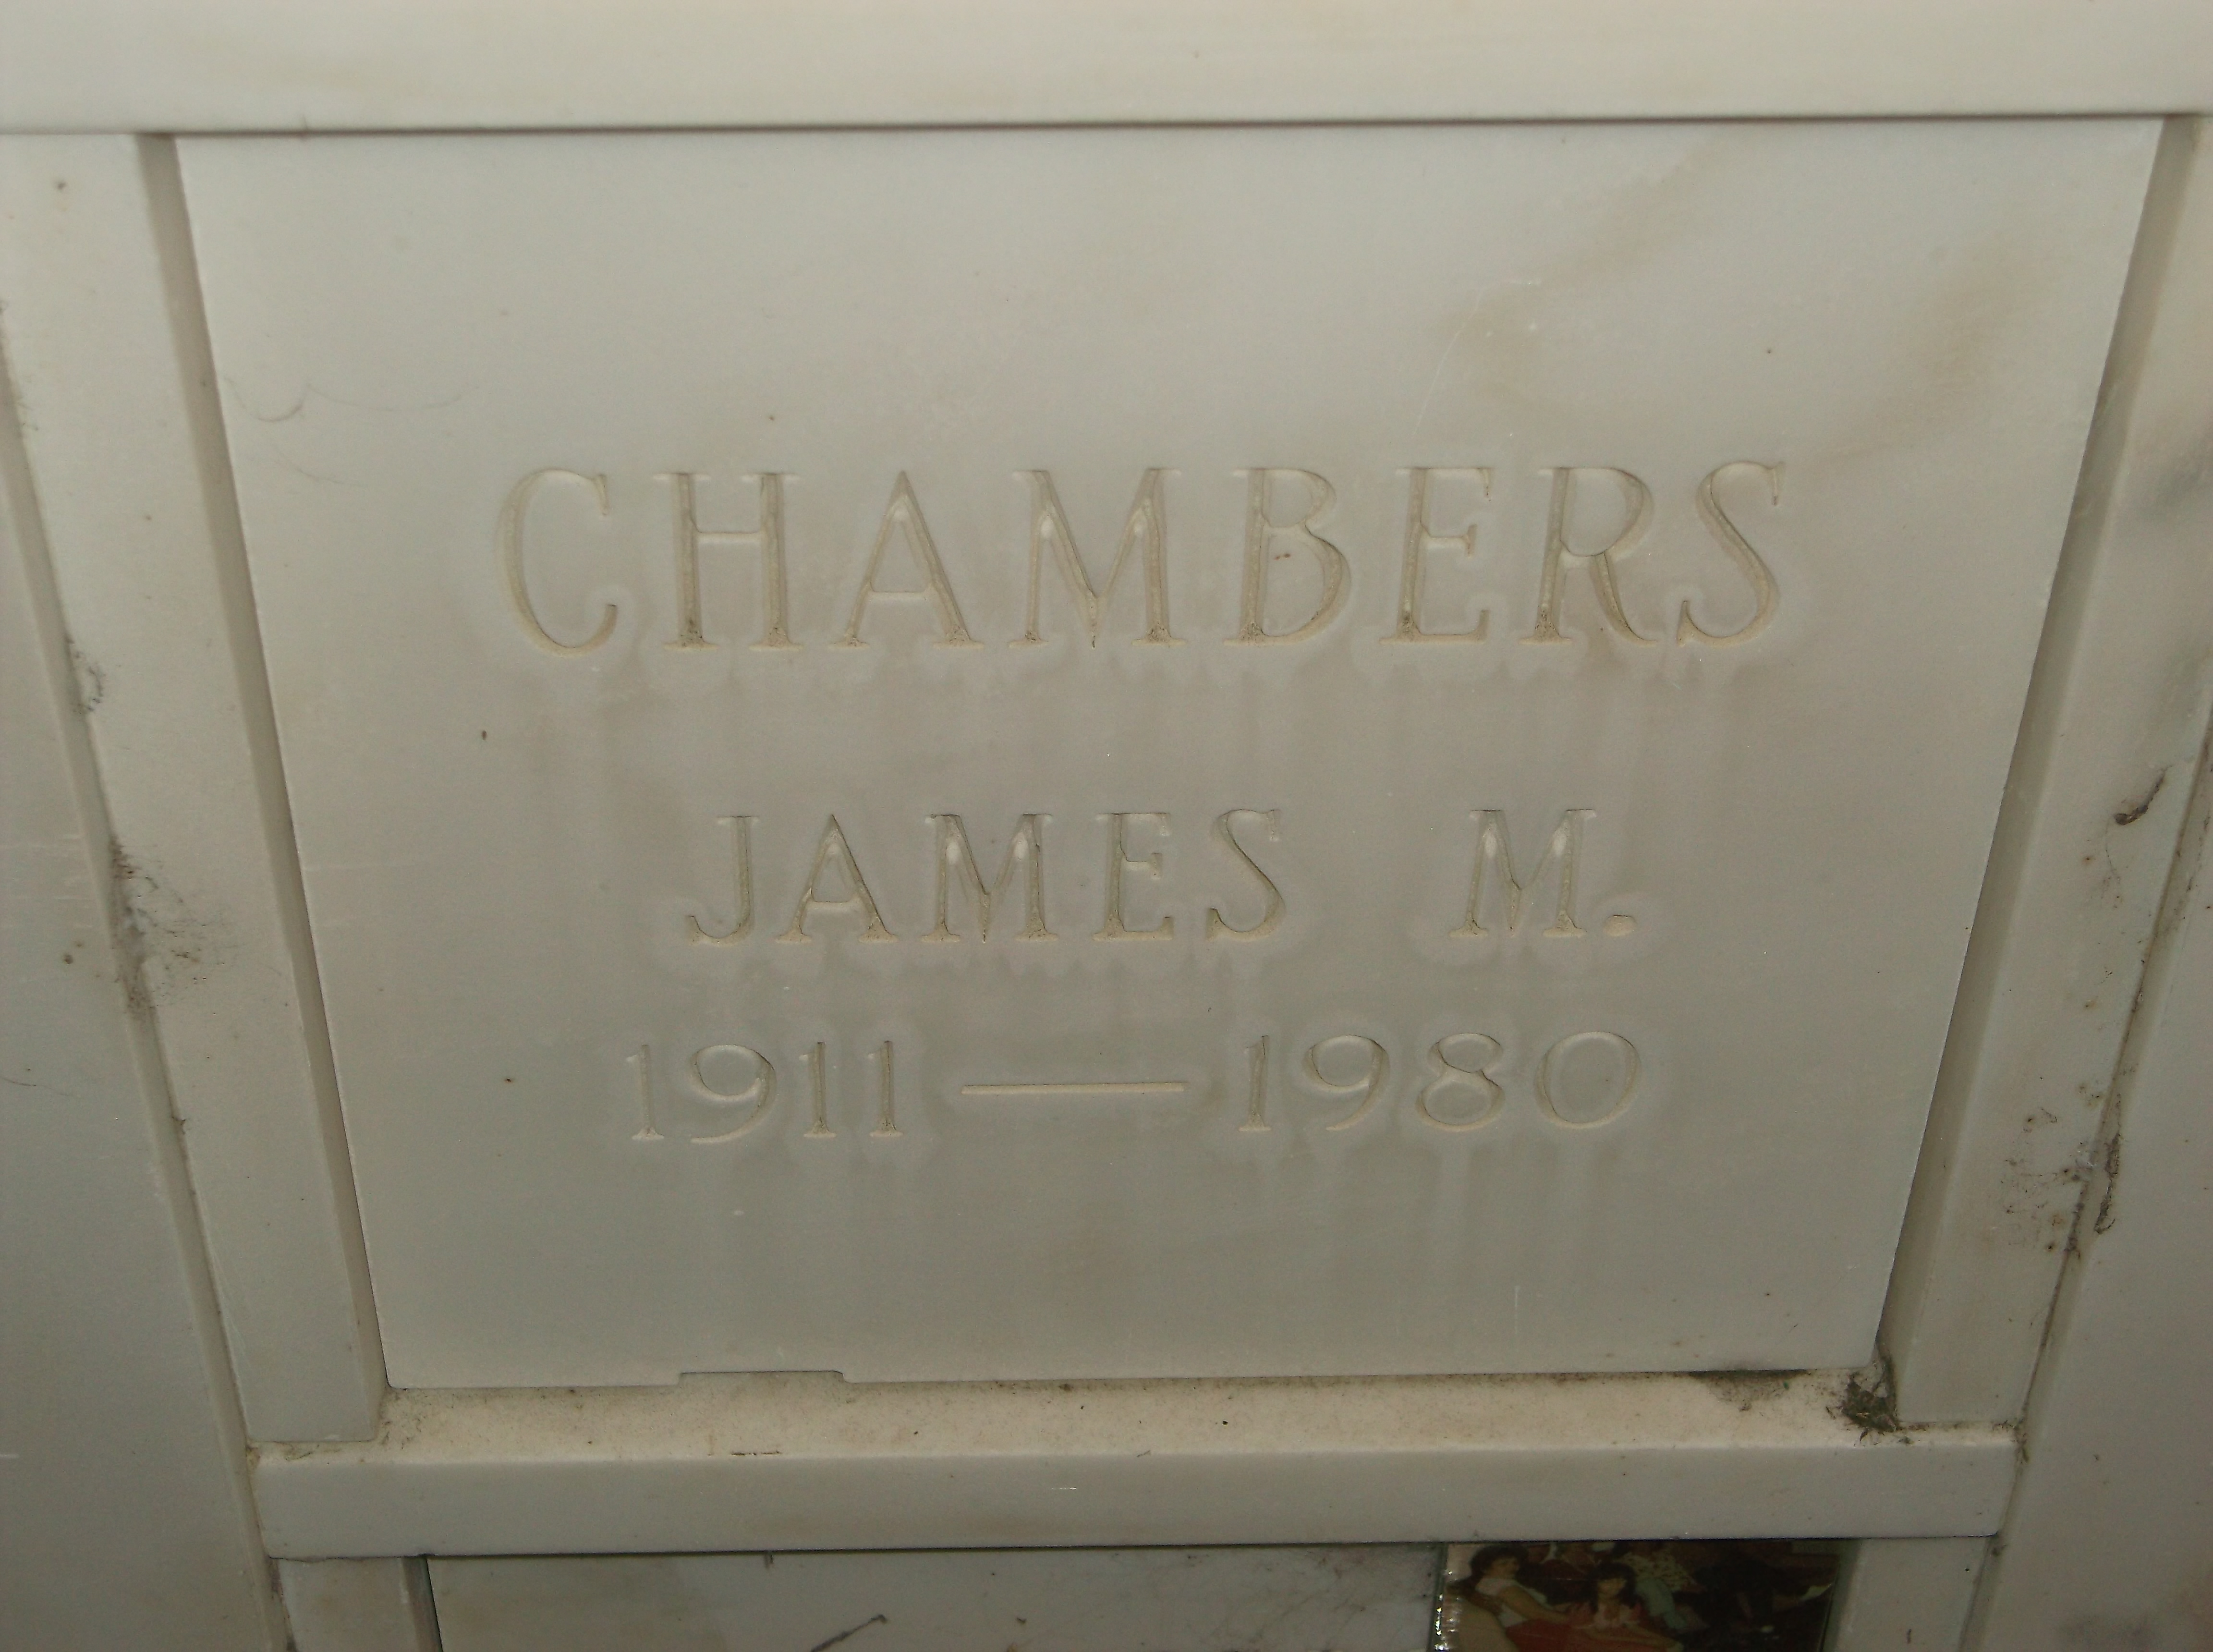 James M Chambers